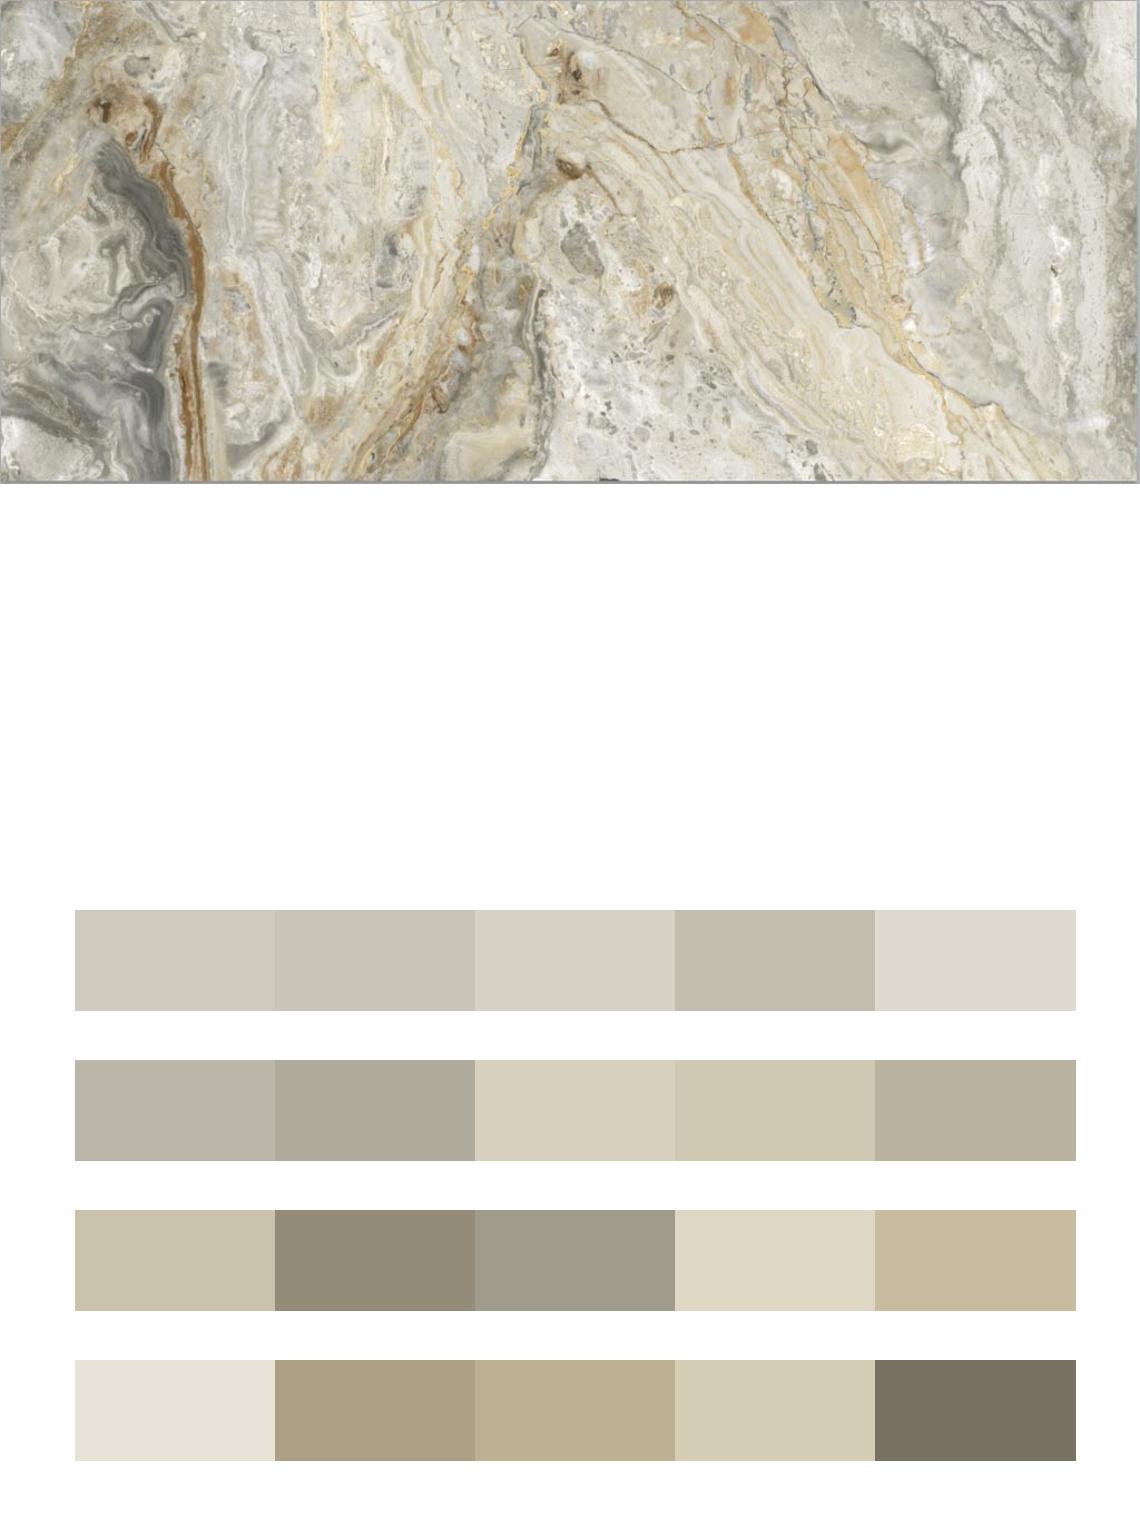 Мрамор серо-бежевый цвета